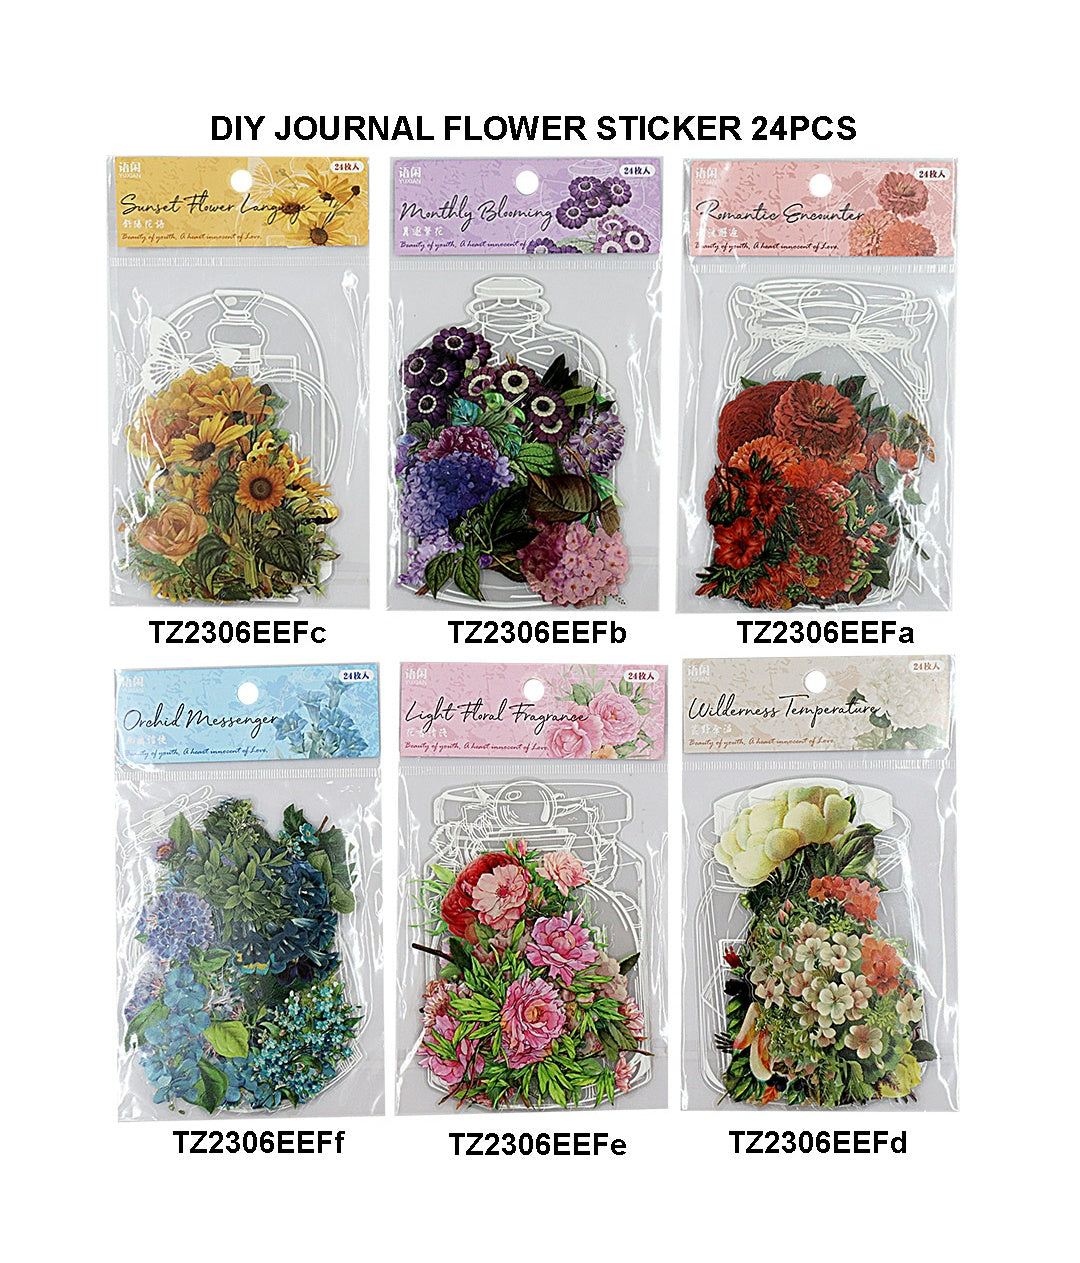 Diy Journal Flower Sticker 24Pcs 252 Tz2306Eef | INKARTO